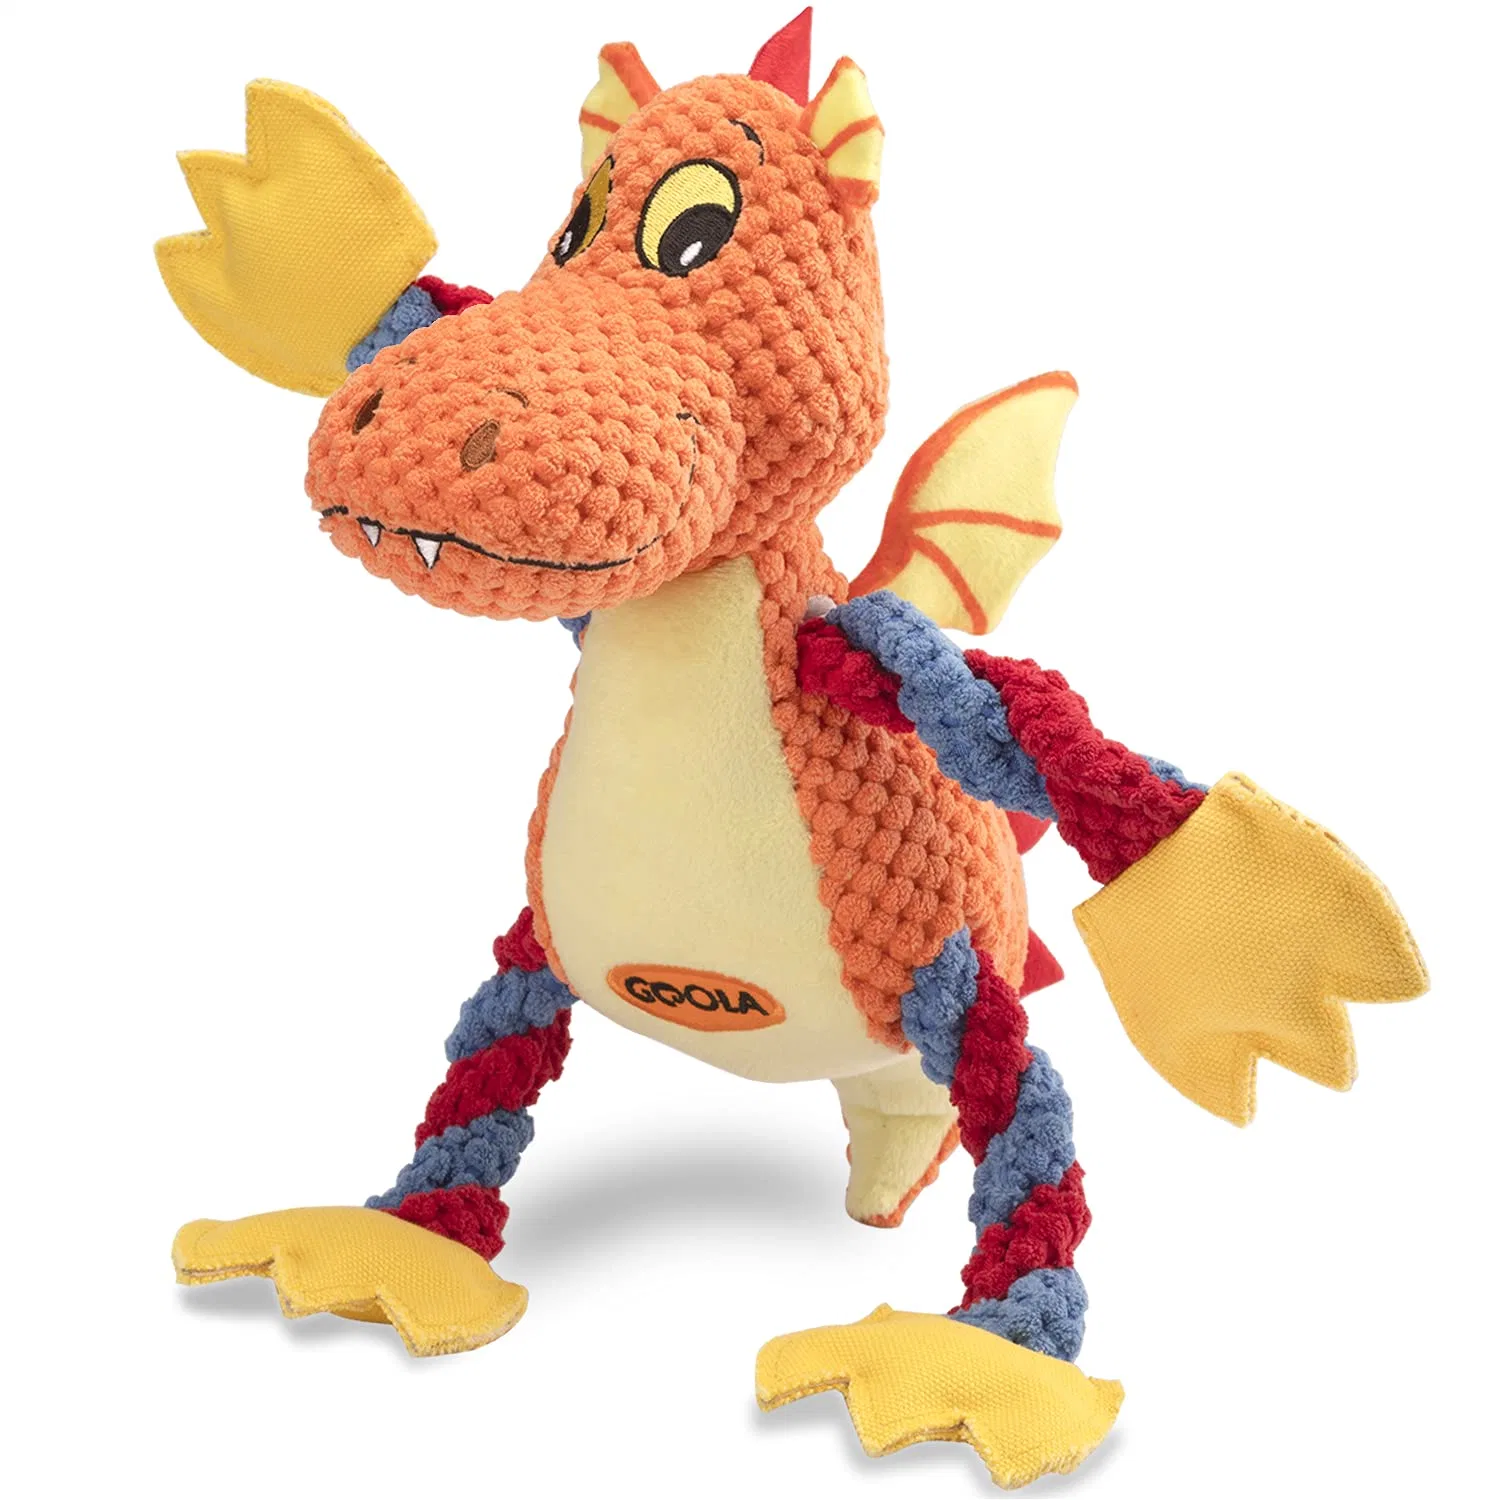 Goola Dog Squeaky Toys Cute Dragon Interactive Plush Stuffed Toy